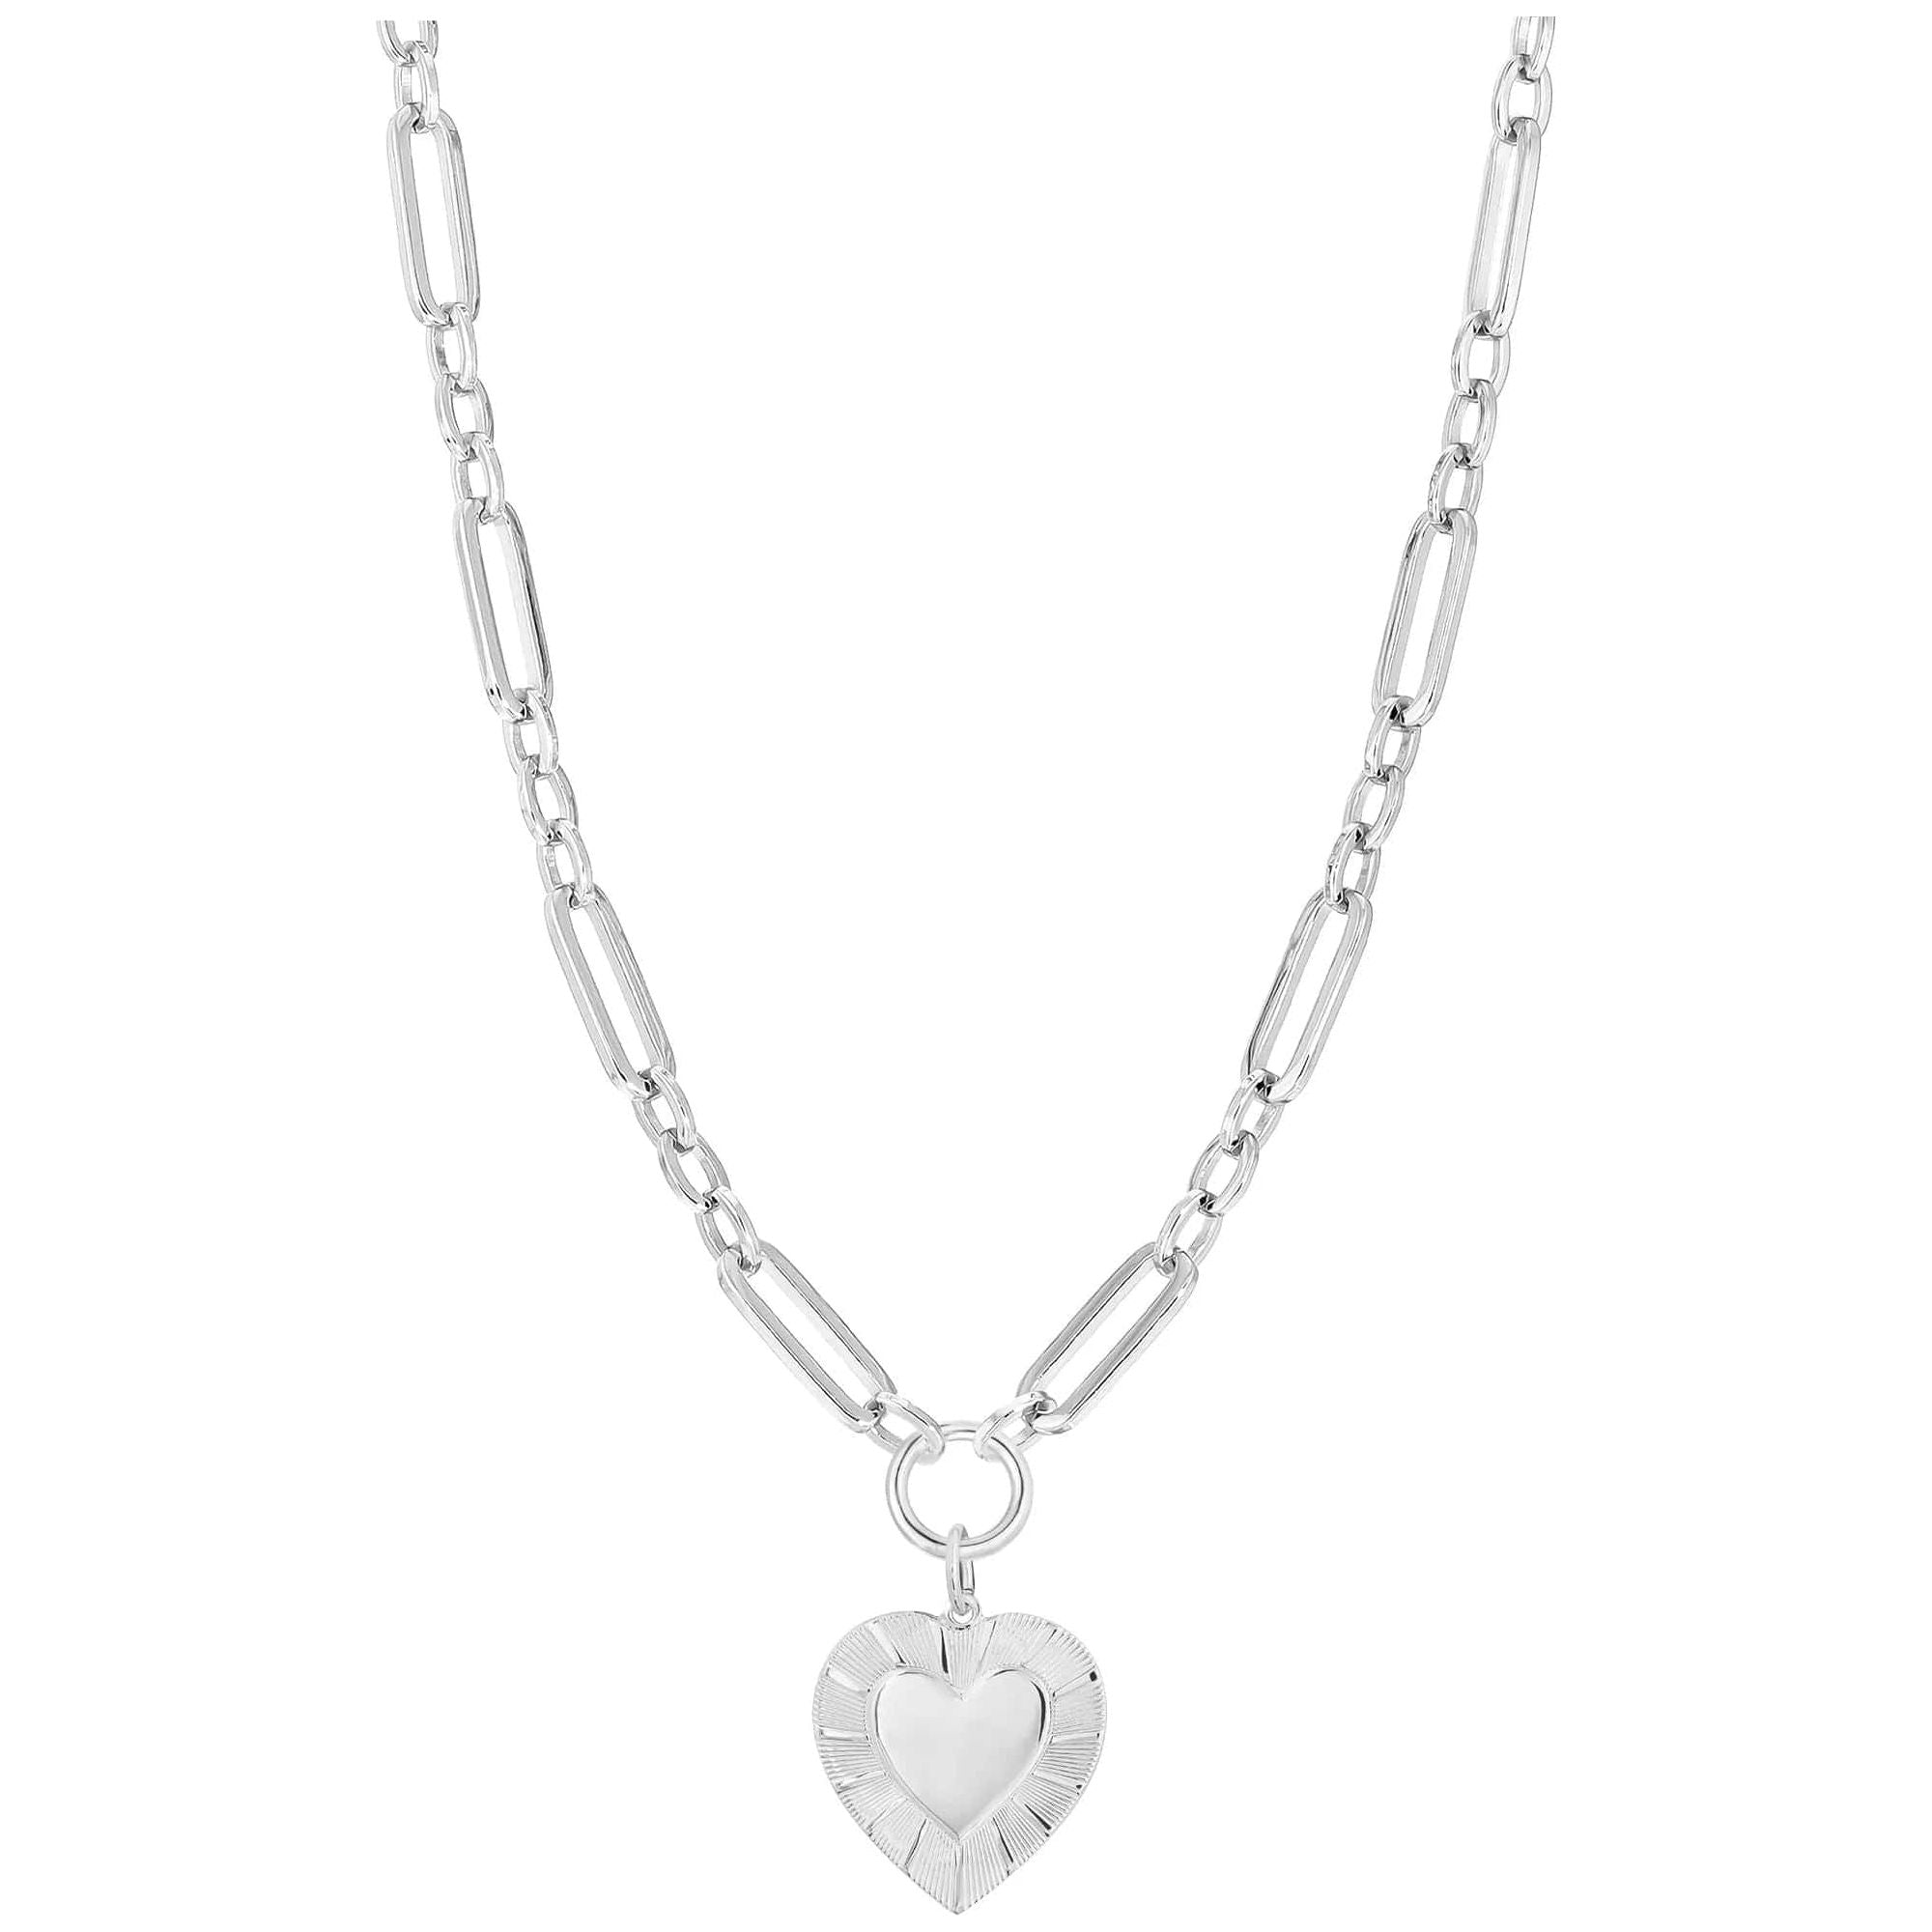 eklexic GOLD Large Multi Link Chain & Heart Pendant Necklace by eklexic